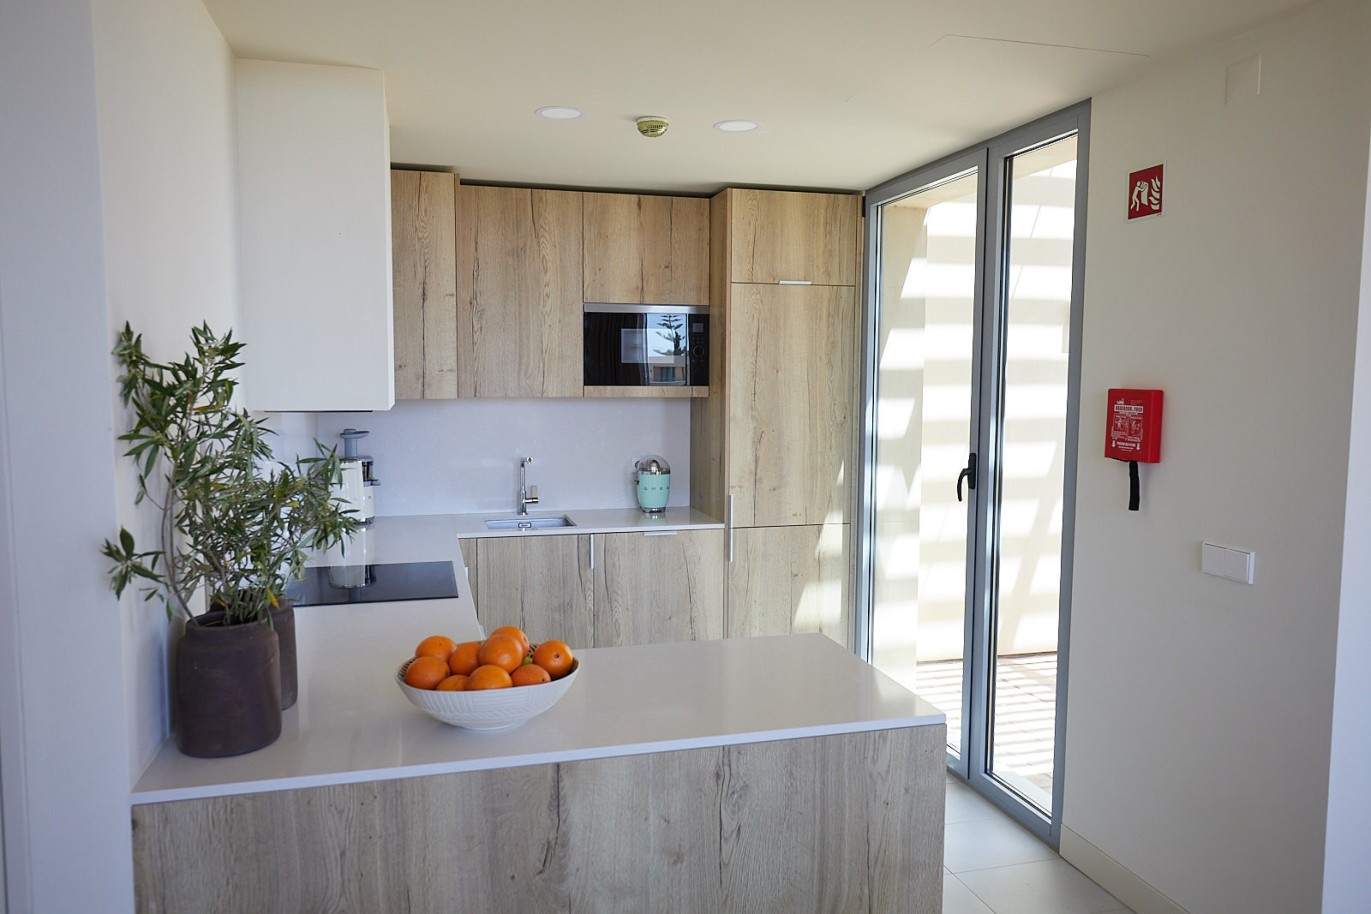 2 bedroom apartment in resort, for sale in Porches, Algarve_228806